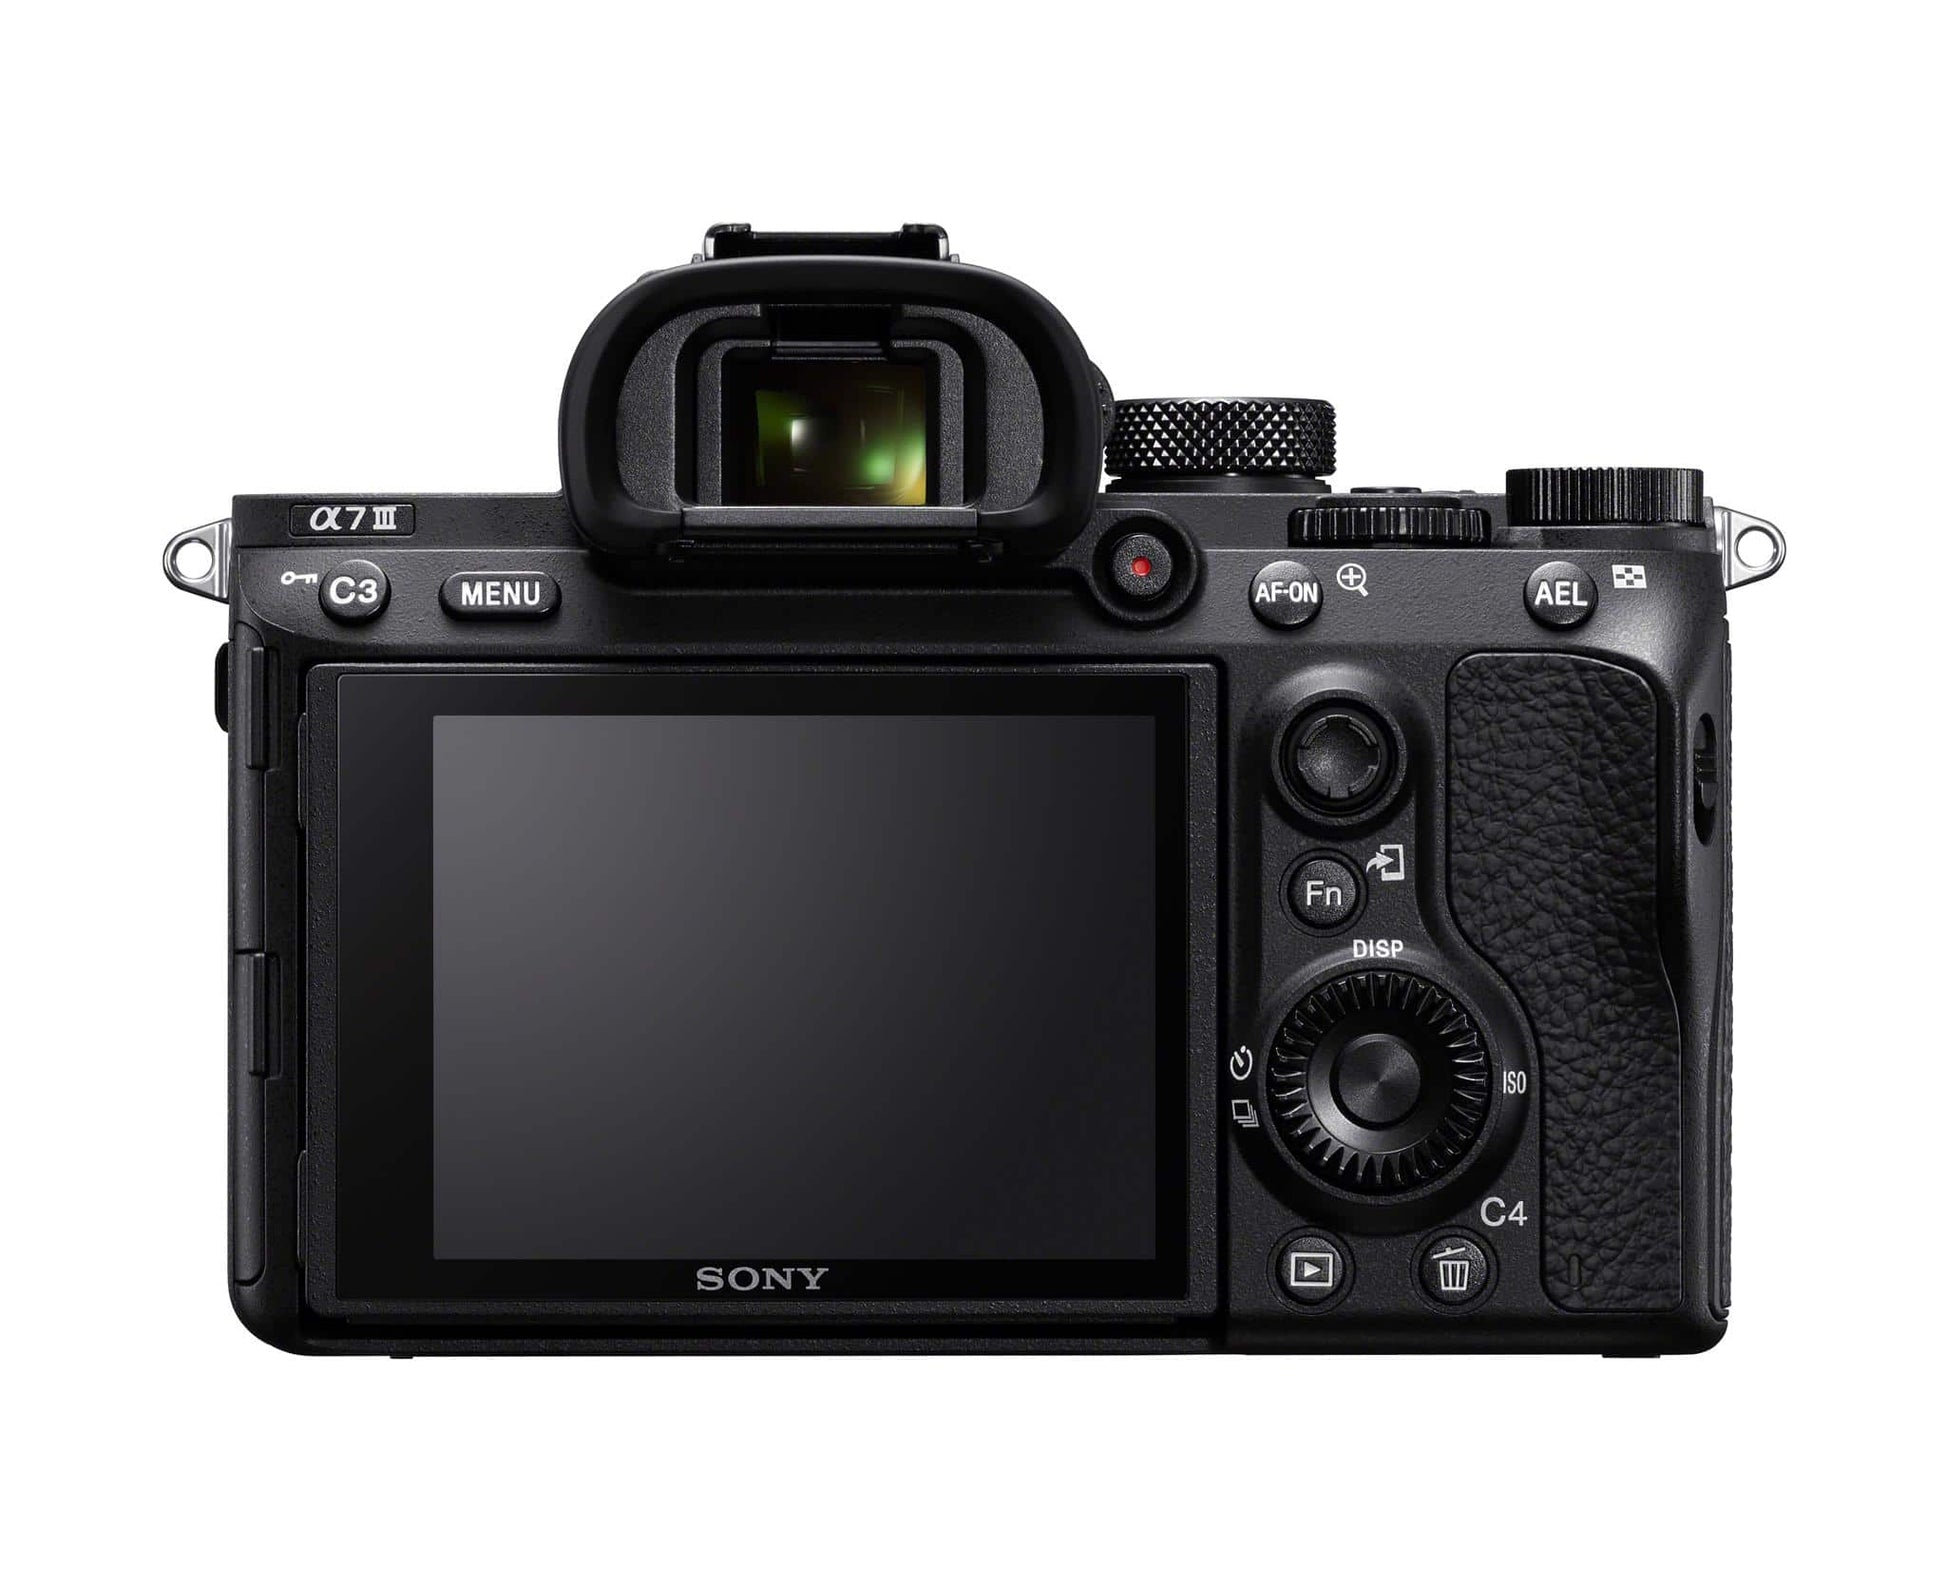 Sony A7 Mark III, FE 28-70mm F/3.5-5.6 OSS Lens.